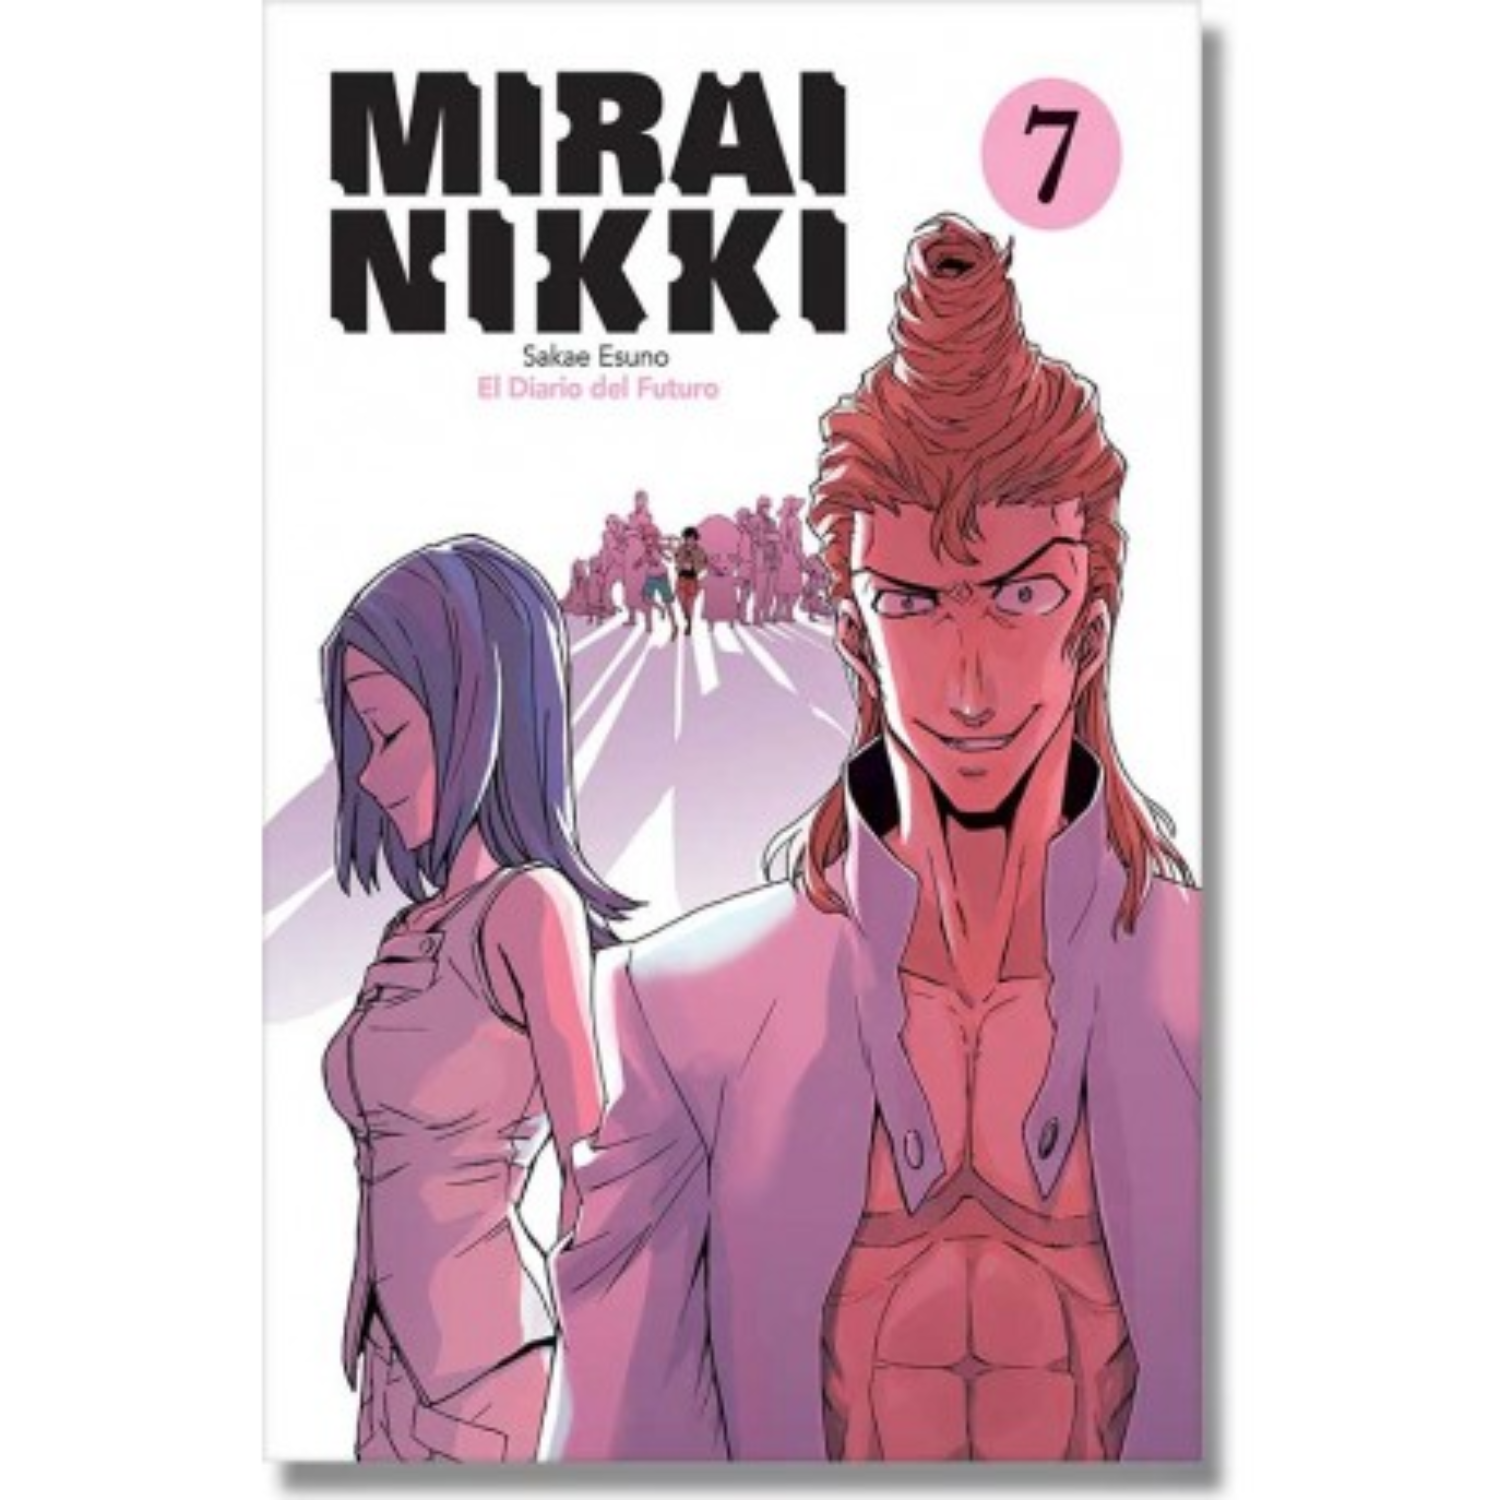 Mirai Nikki #09 - Sakae Esuno